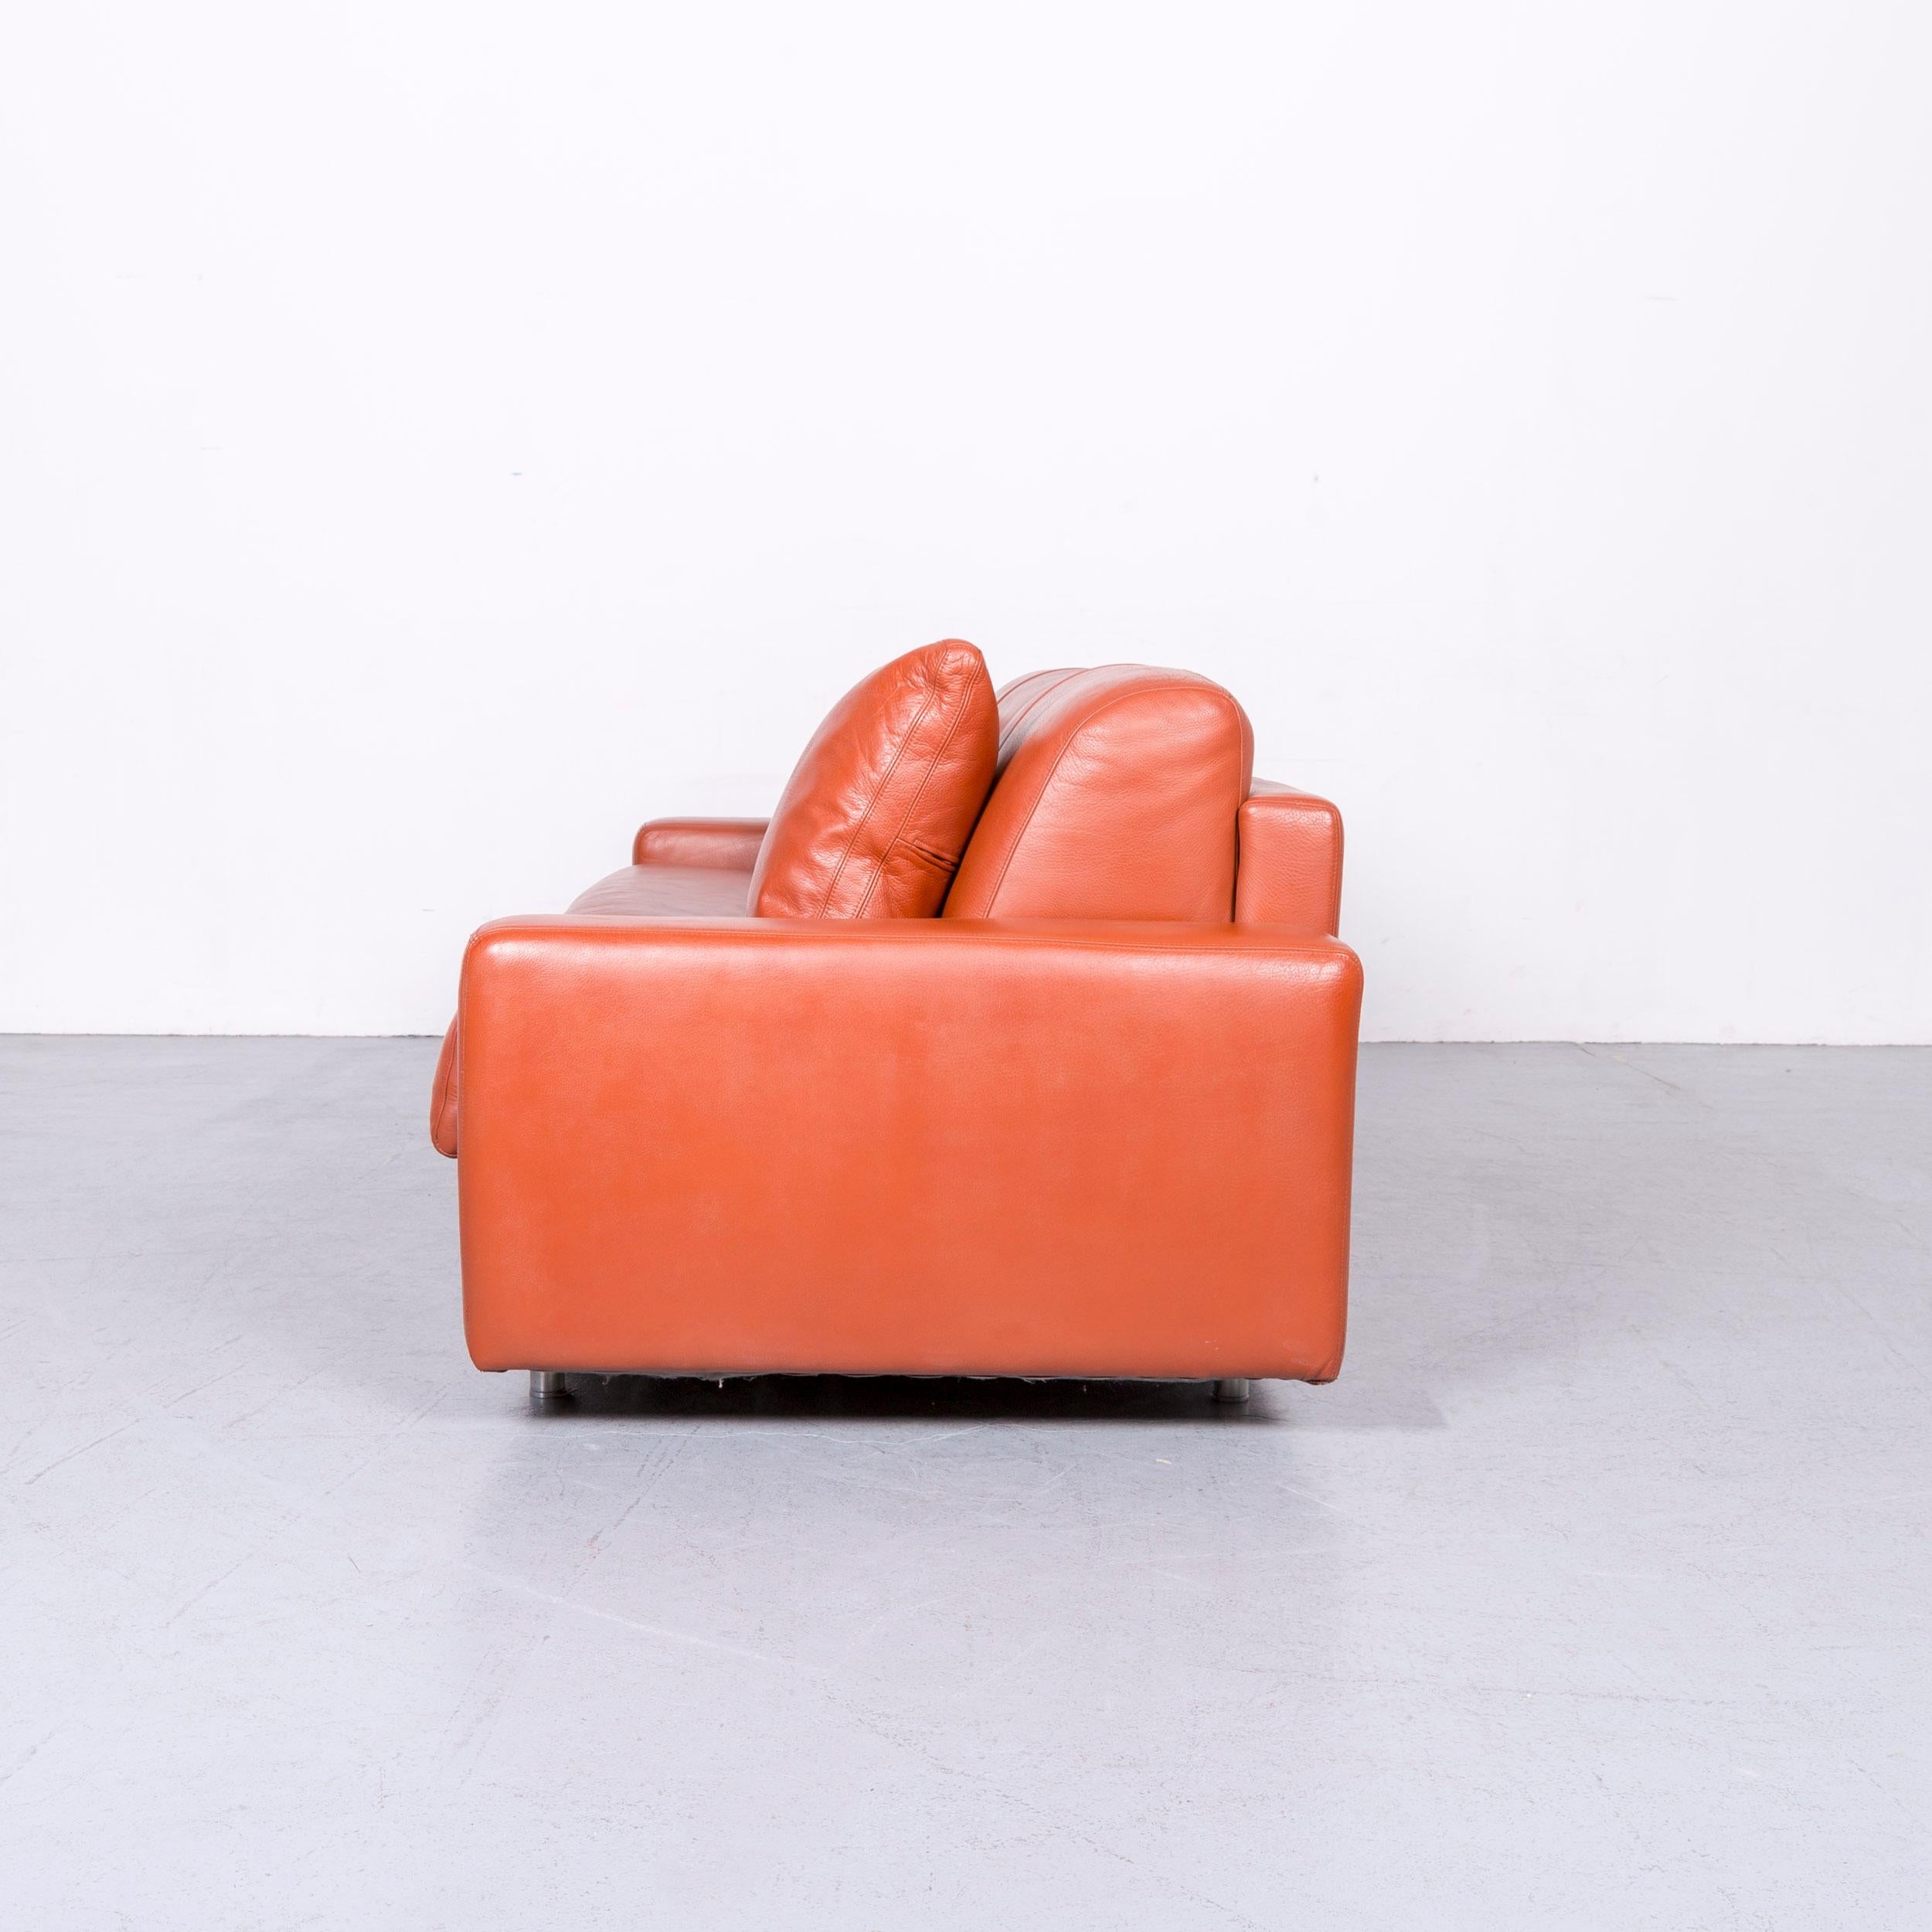 Cramer Leather Bed Sofa Orange Three-Seat Couch 5